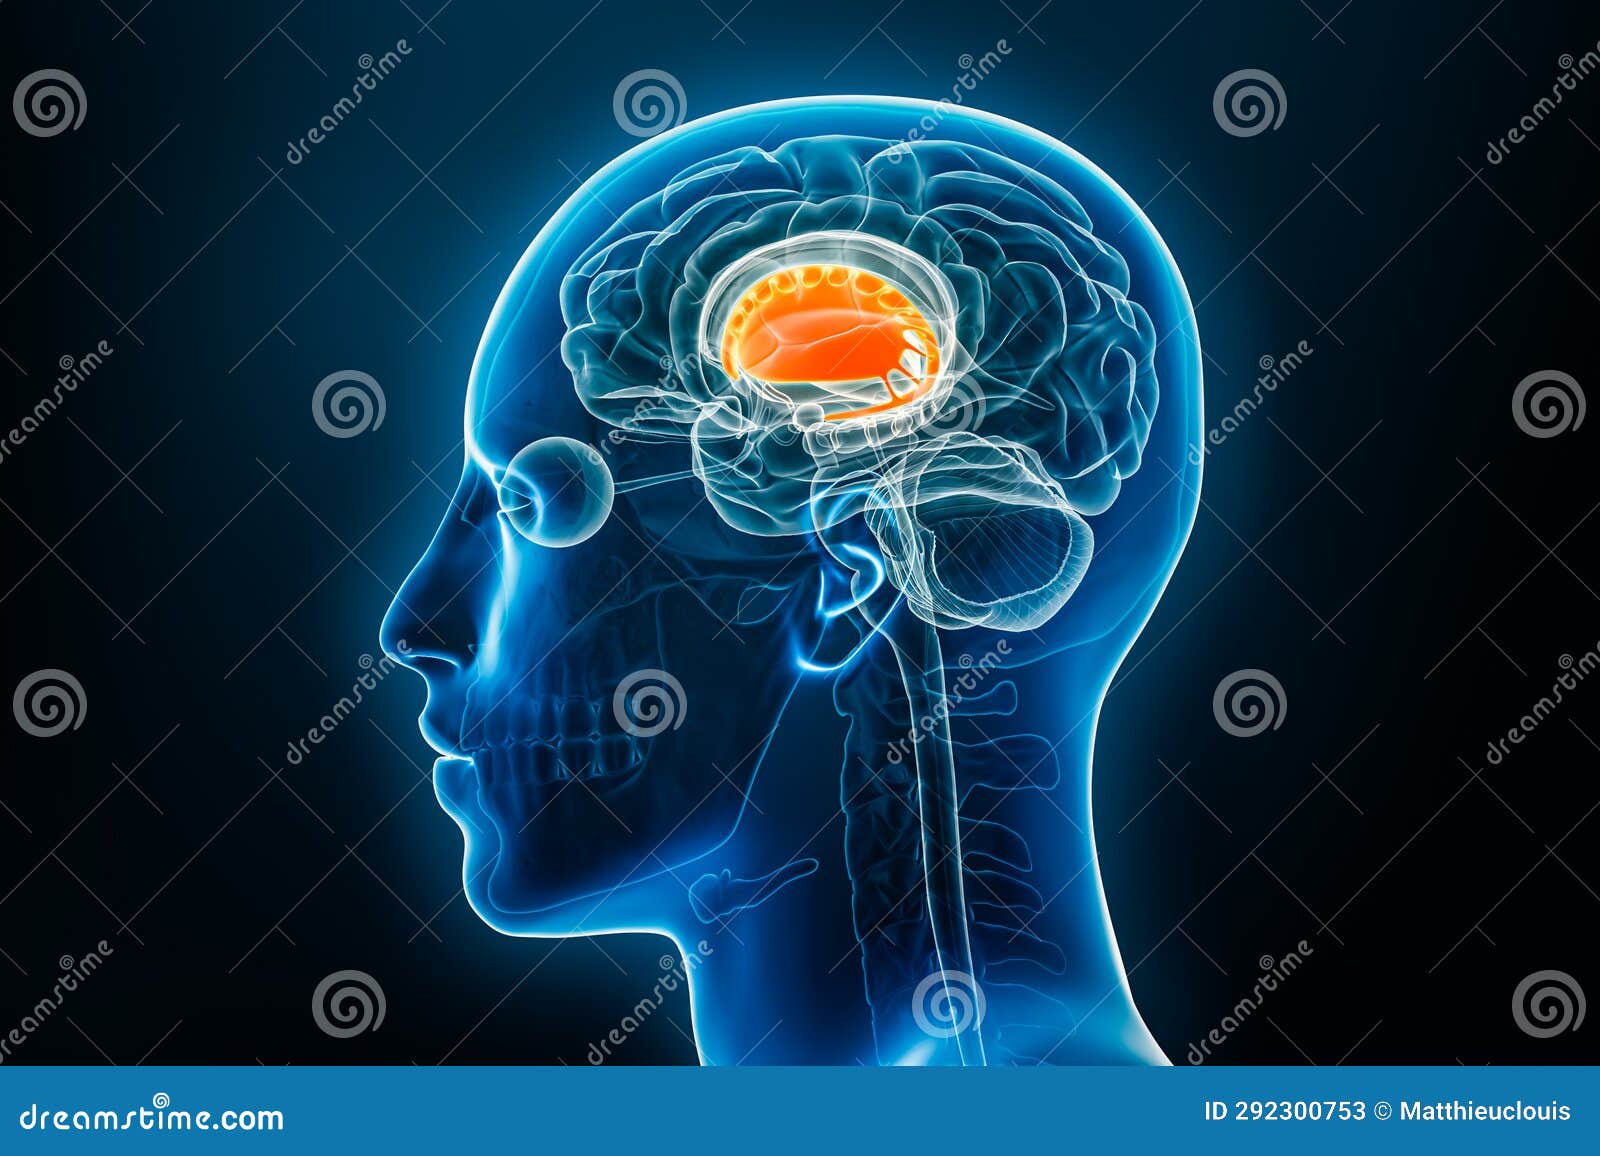 dorsal striatum with putamen and caudate nucleus or basal ganglia 3d rendering . human brain and body anatomy, medical